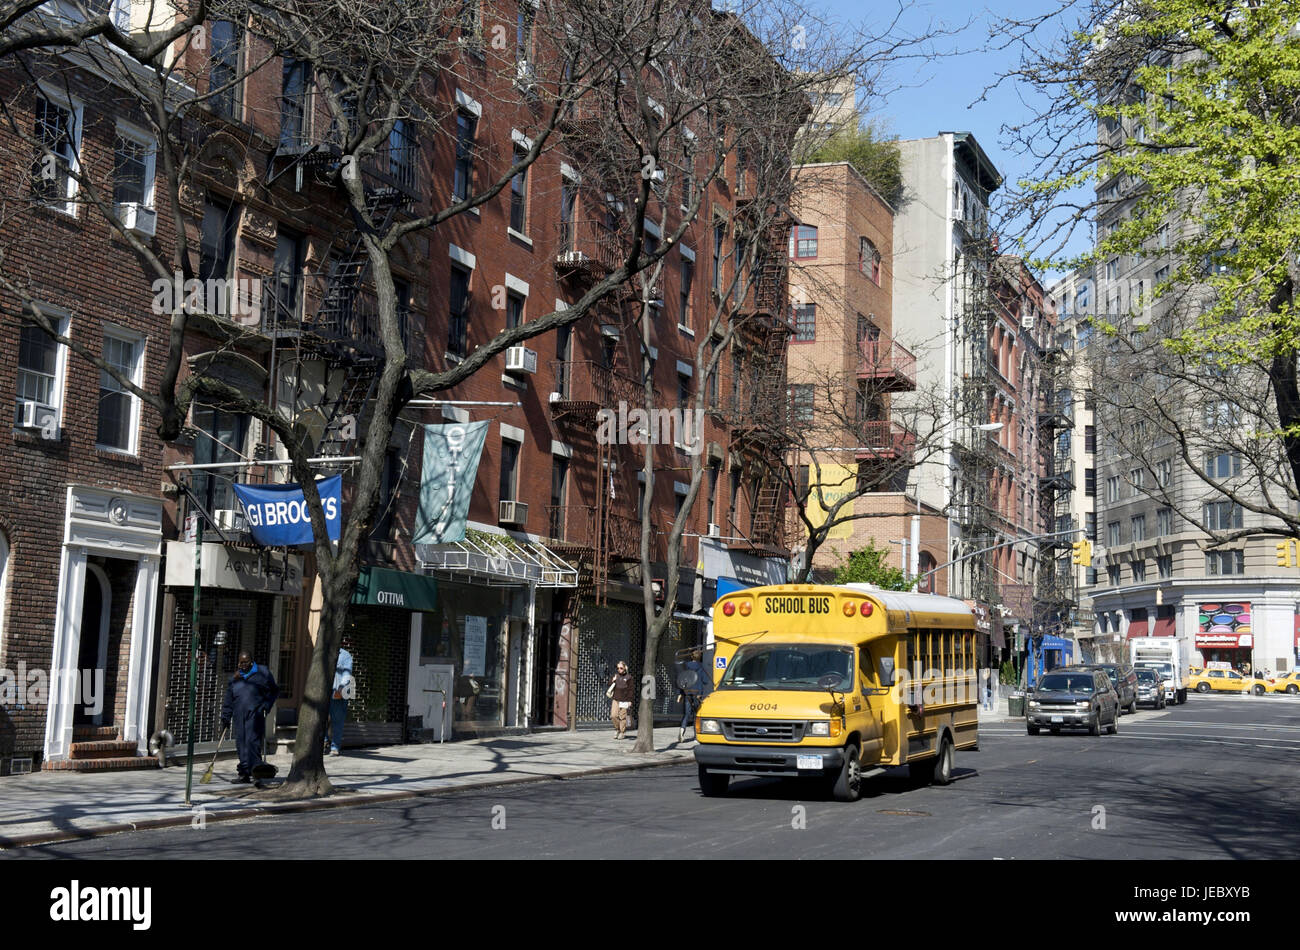 Stati Uniti, America, New York, Manhattan Soho, giallo scuola bus, Foto Stock